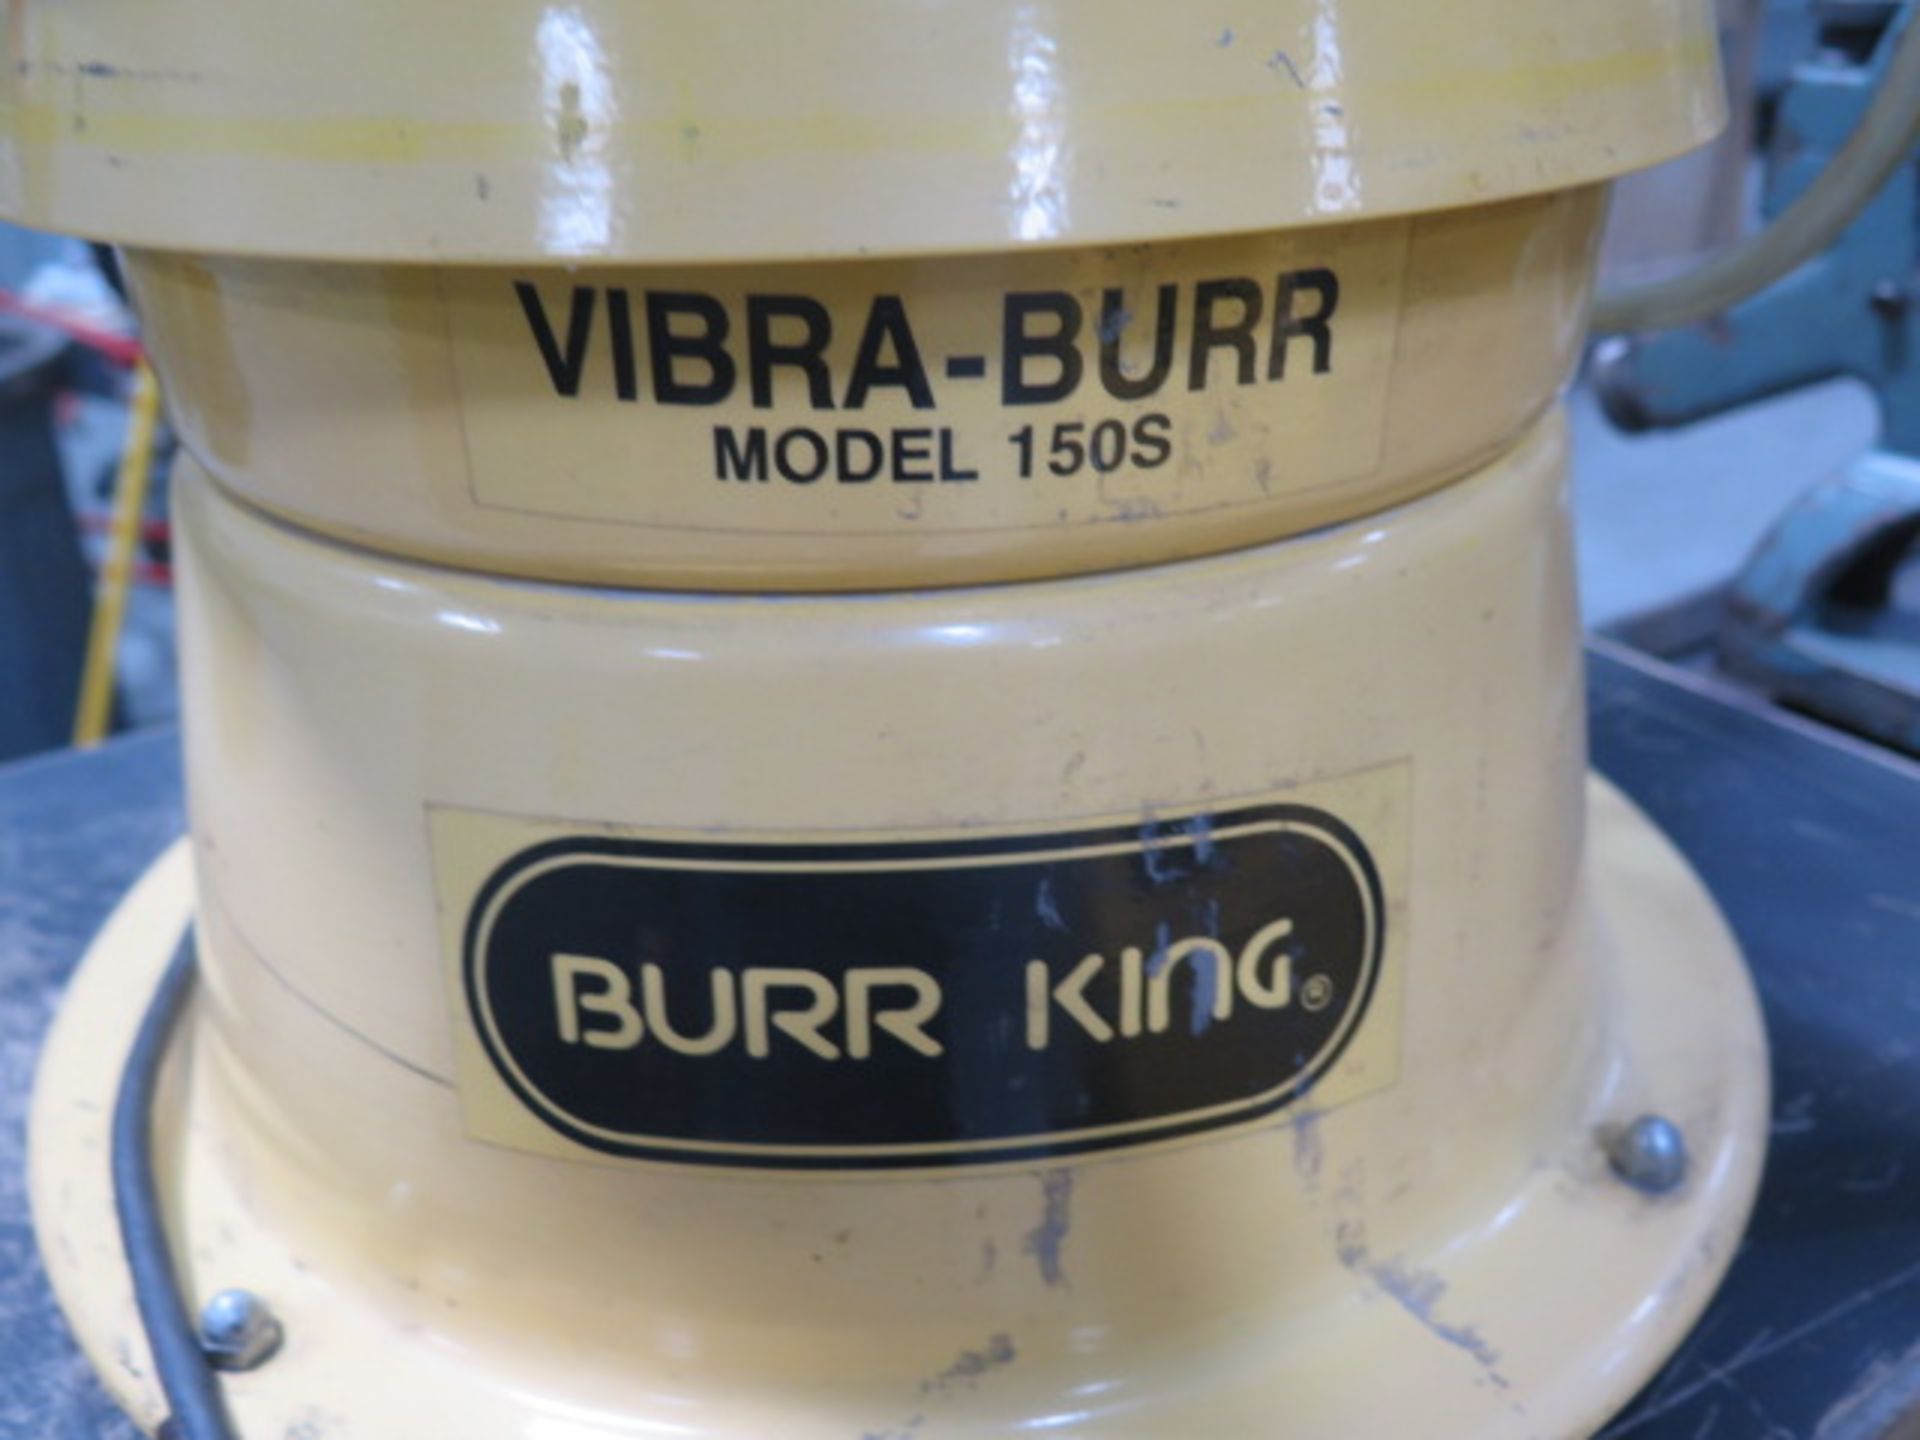 Burr King mdl. 150S "Vibra-Burr" Media Tumbler (SOLD AS-IS - NO WARRANTY) - Image 3 of 3